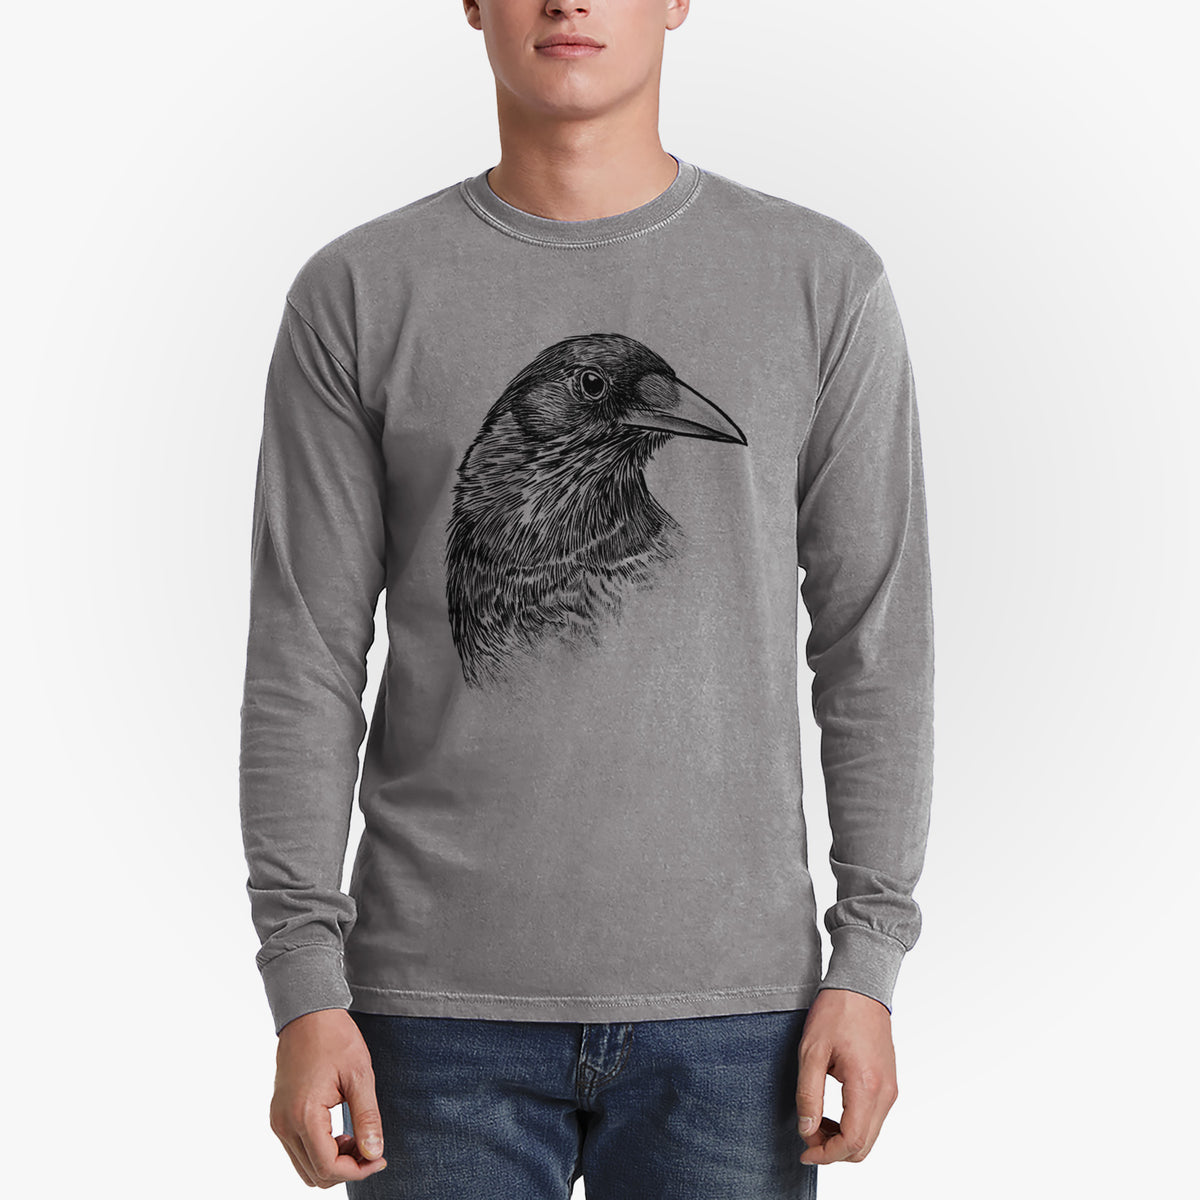 American Crow Bust - Corvus brachyrhynchos - Heavyweight 100% Cotton Long Sleeve